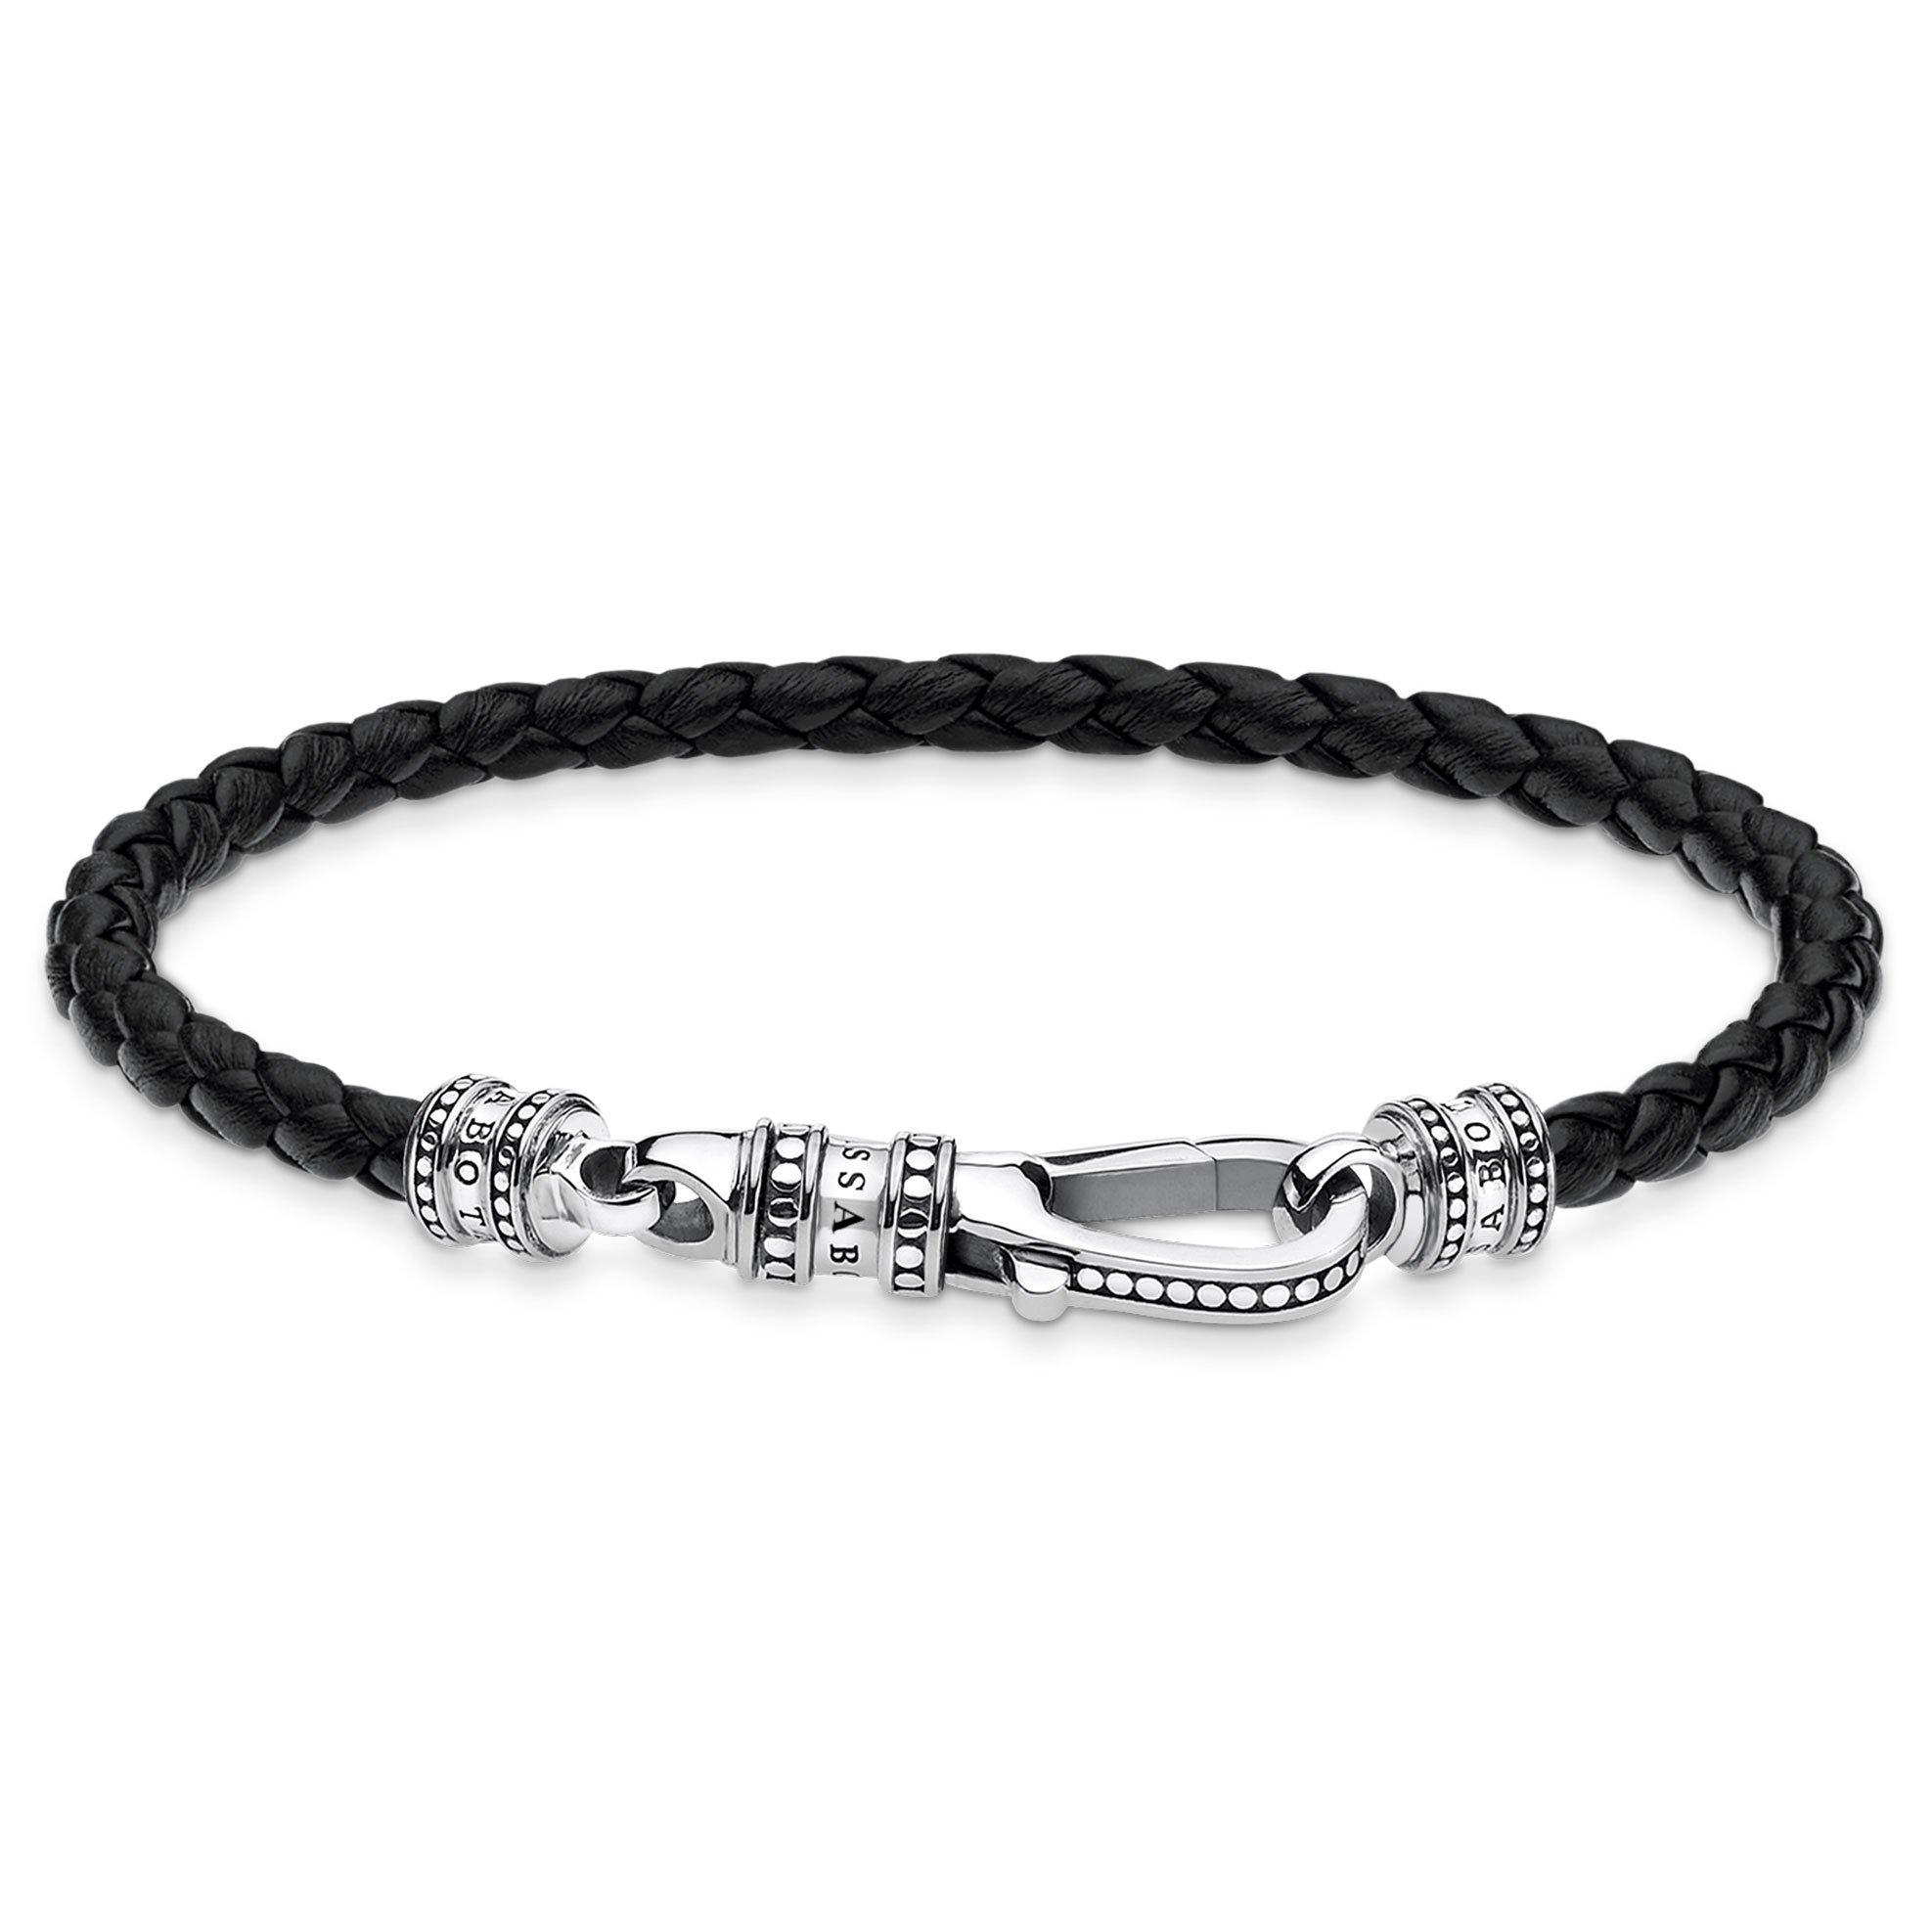 Thomas Sabo Leather Braided Bracelet | 0126365 | Beaverbrooks the Jewellers